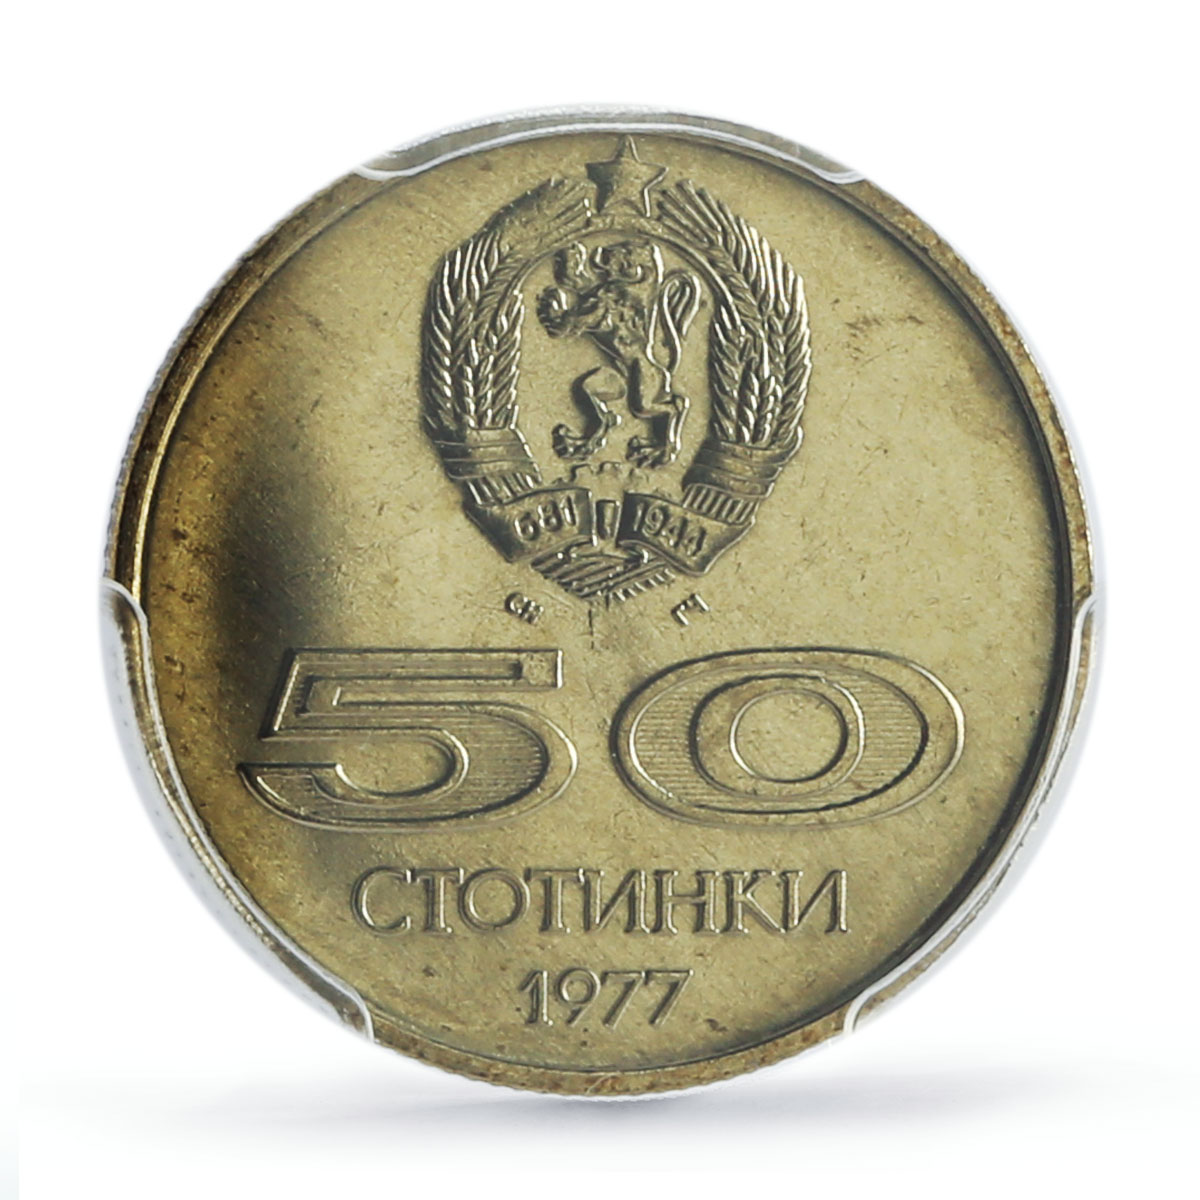 Bulgaria 50 stotinki University Sport Games in Sofia MS66 PCGS CuNi coin 1977